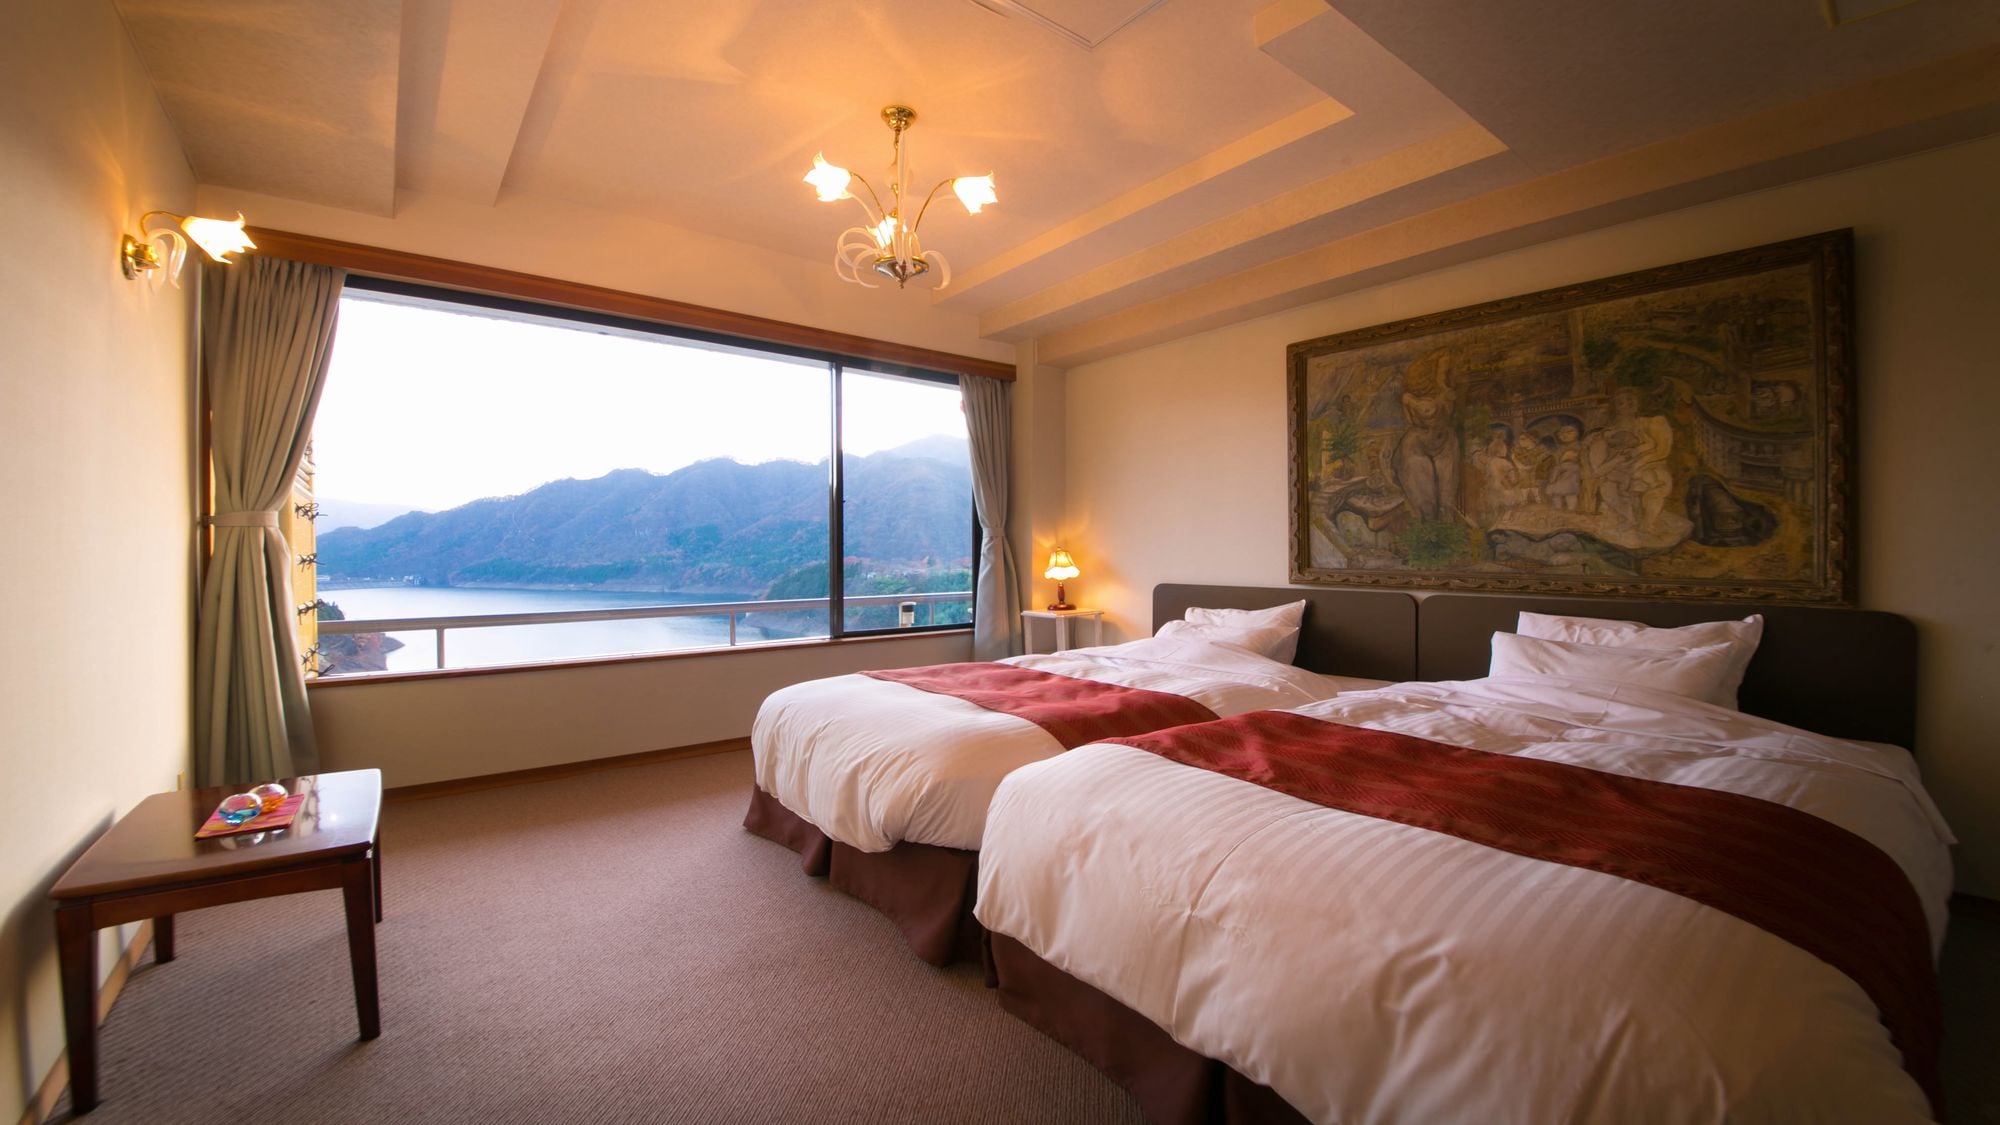 [Top floor guest room] Hourai ◇ Japanese-style room 12.5 tatami mats + Western-style room + tea room